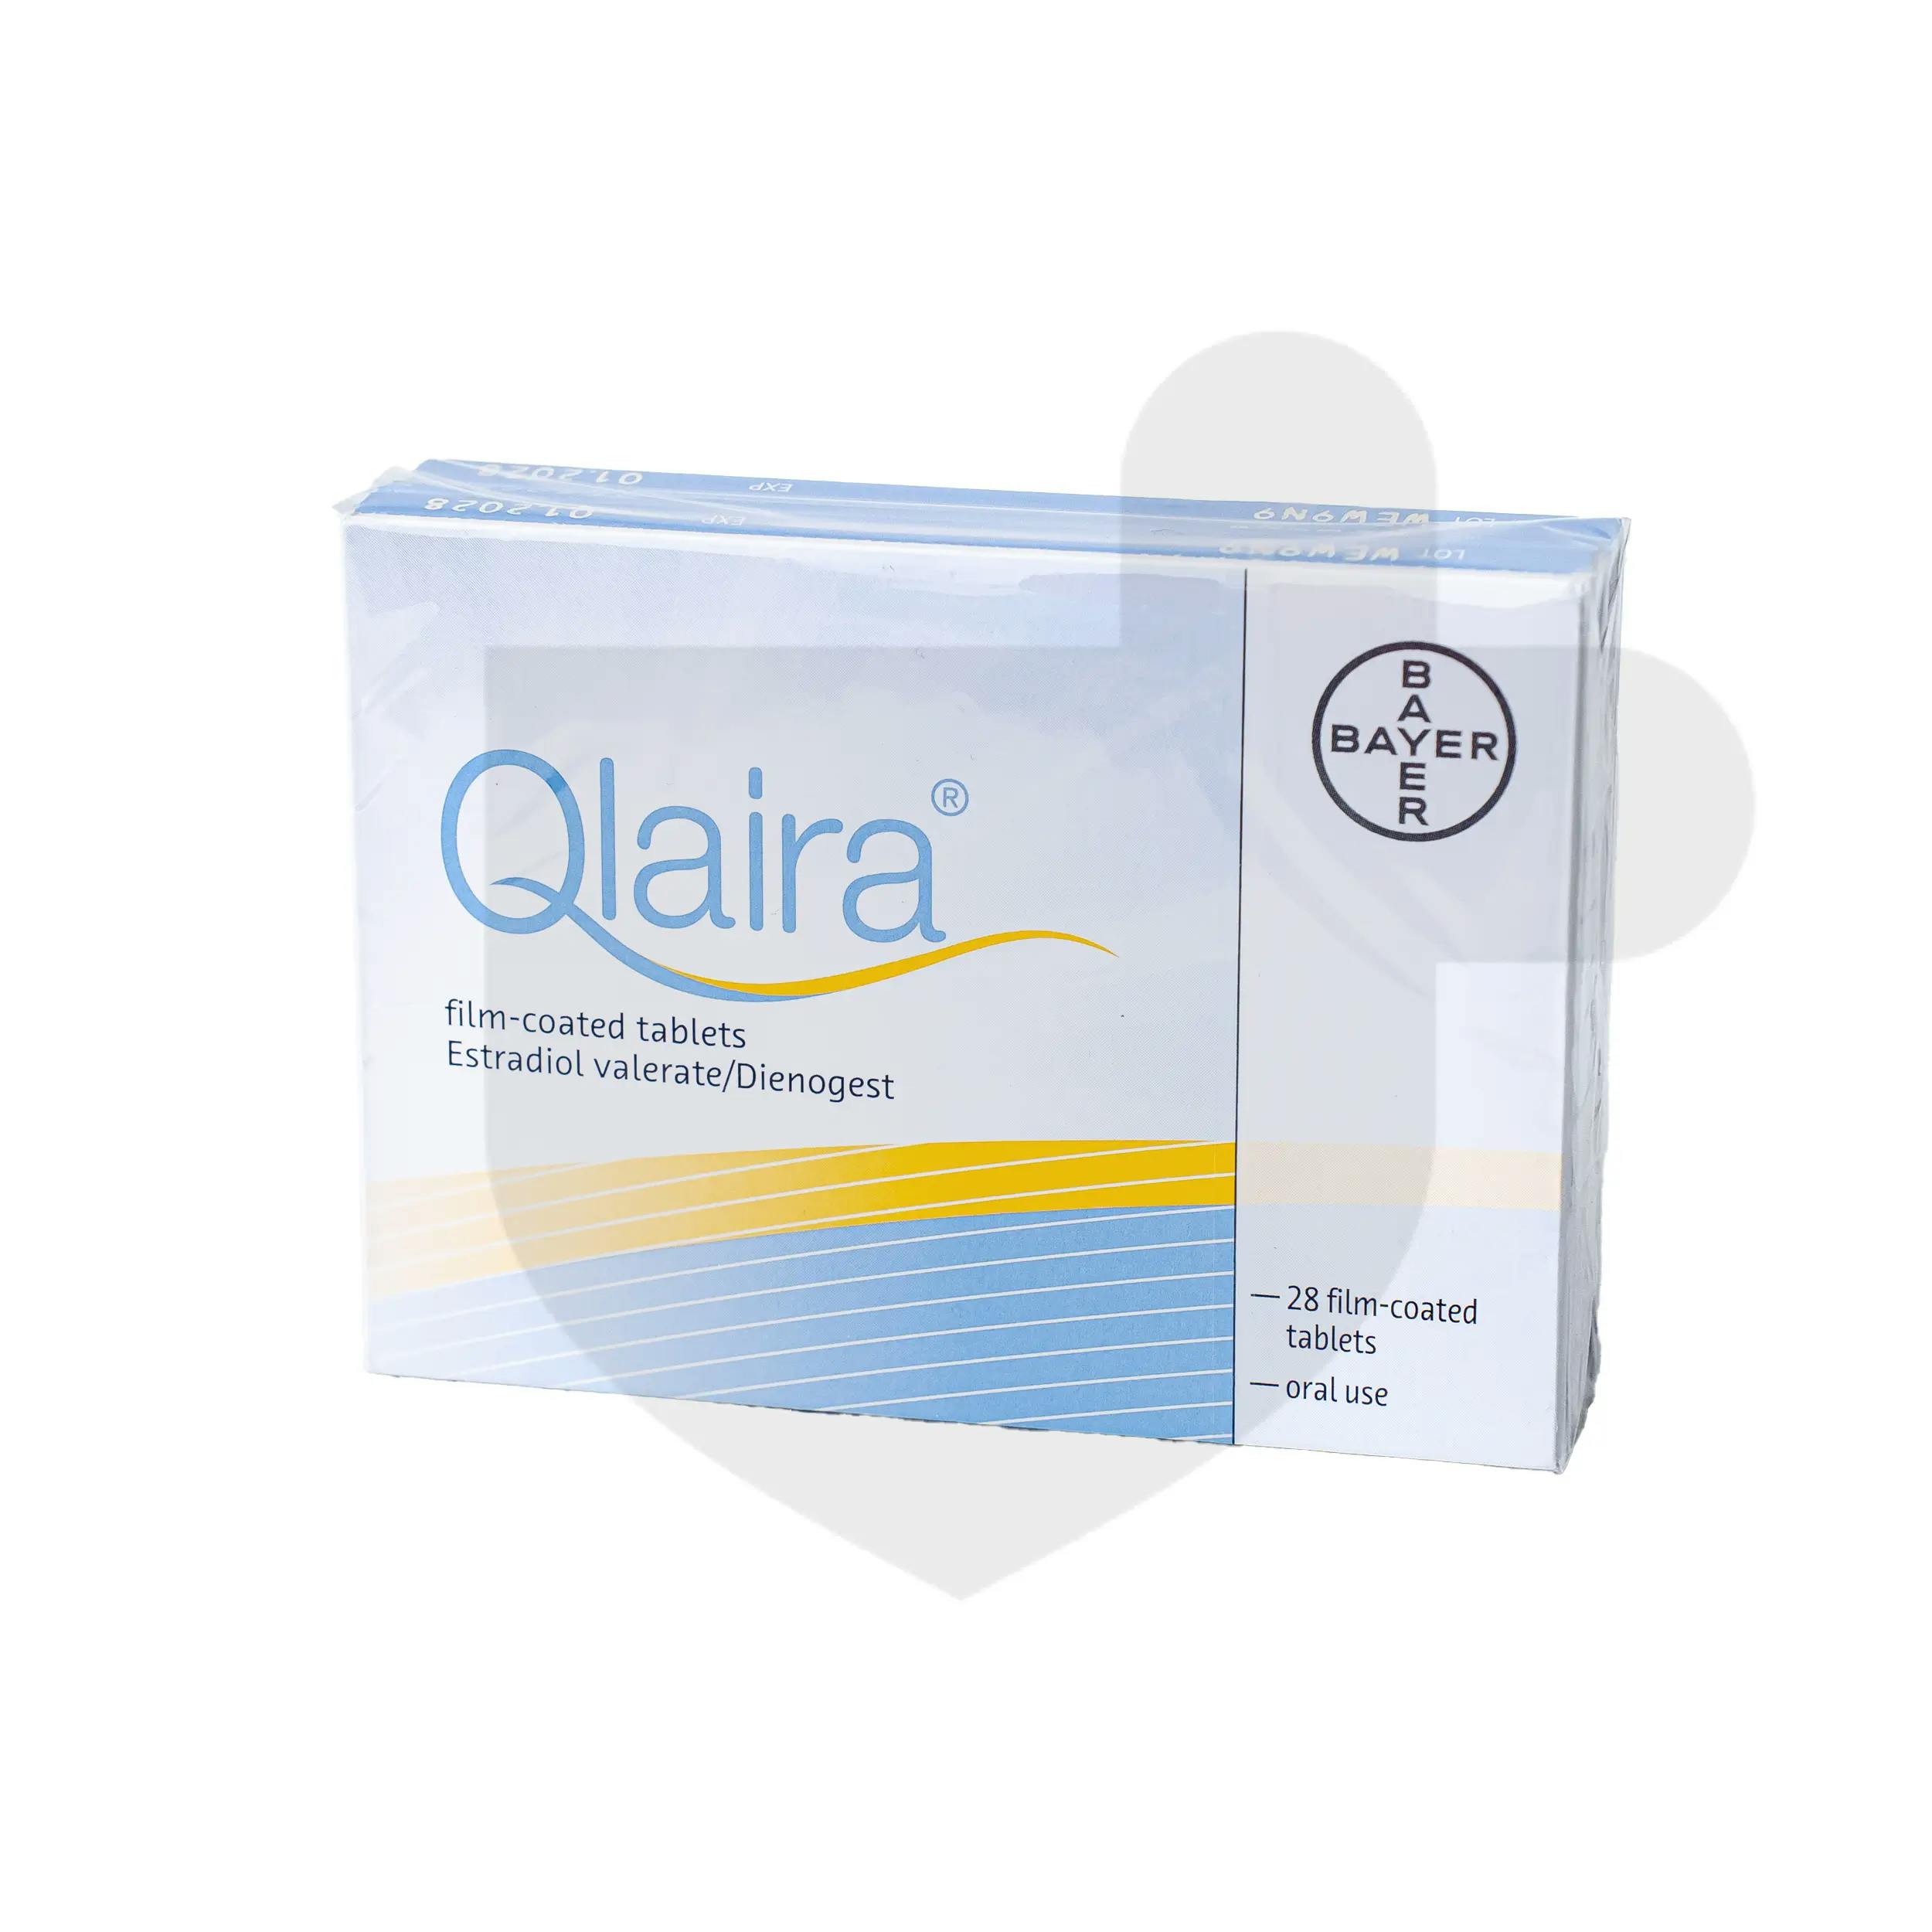 QLAIRA <sup class="brand-mark">®</sup>